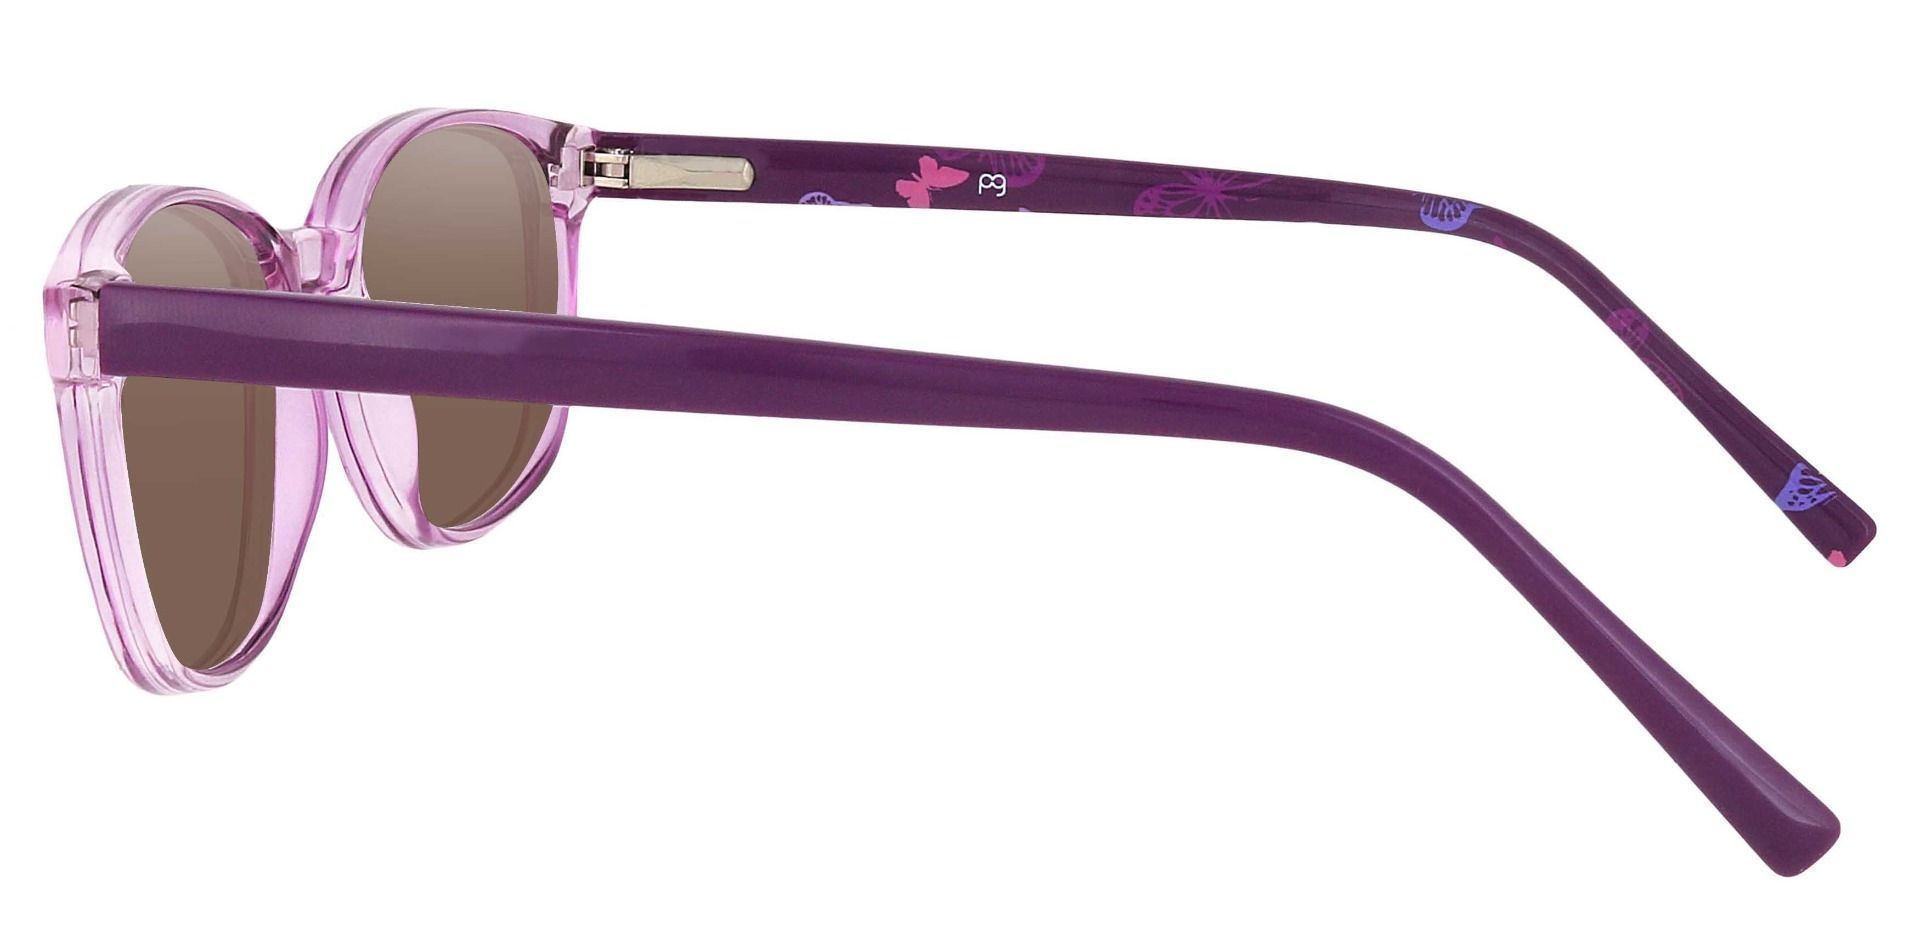 Branson Rectangle Prescription Sunglasses - Purple Frame With Brown Lenses